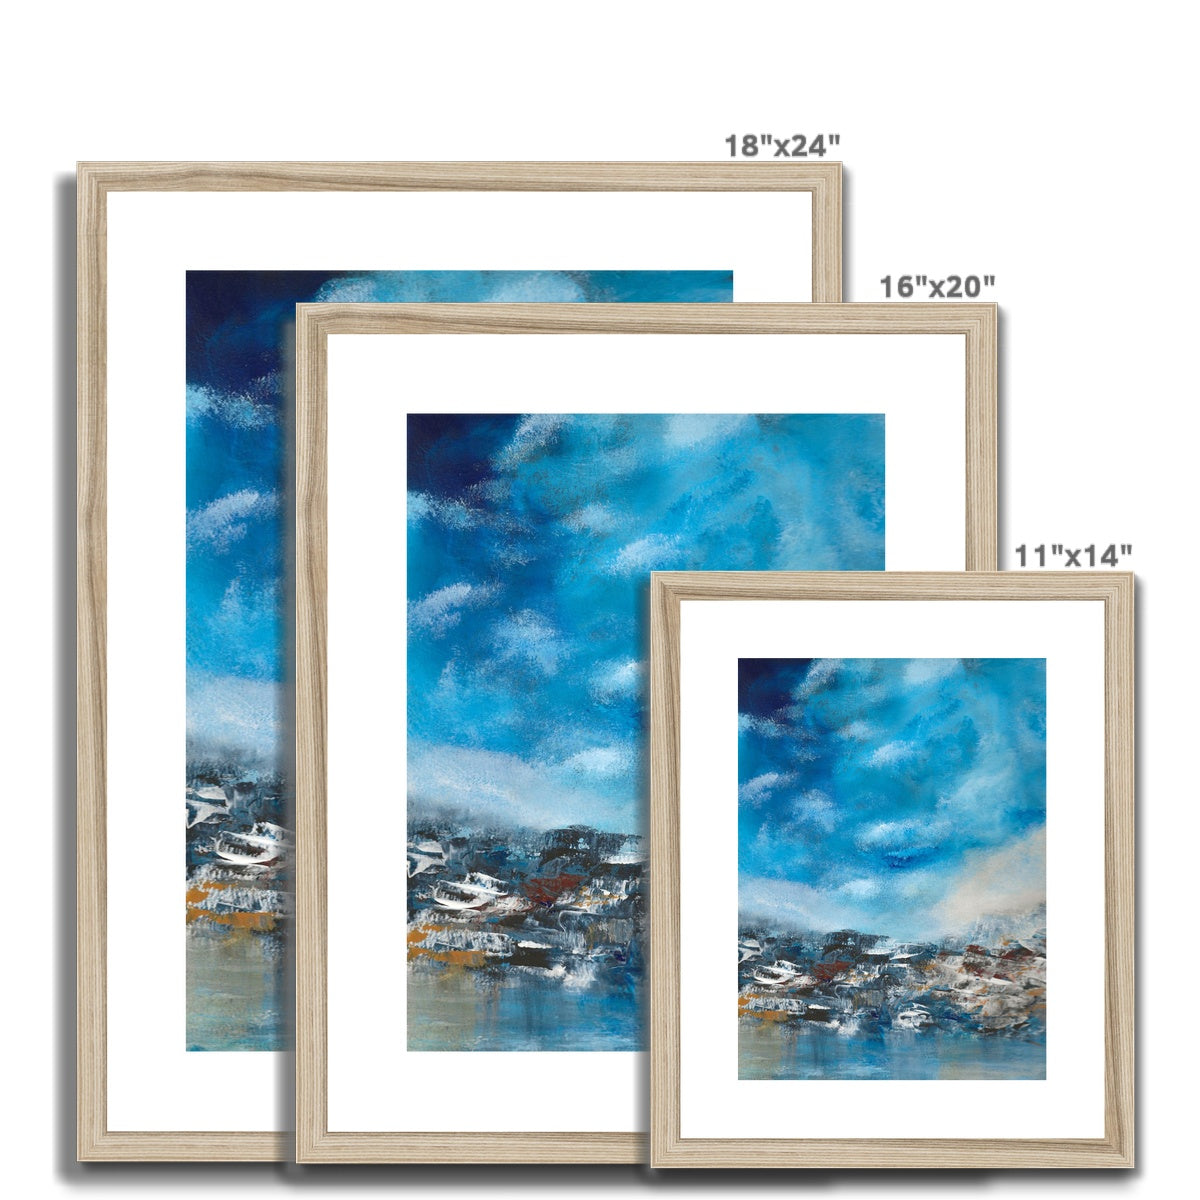 Azure Serenity Big Skies artwork - Framed and Mounted Print